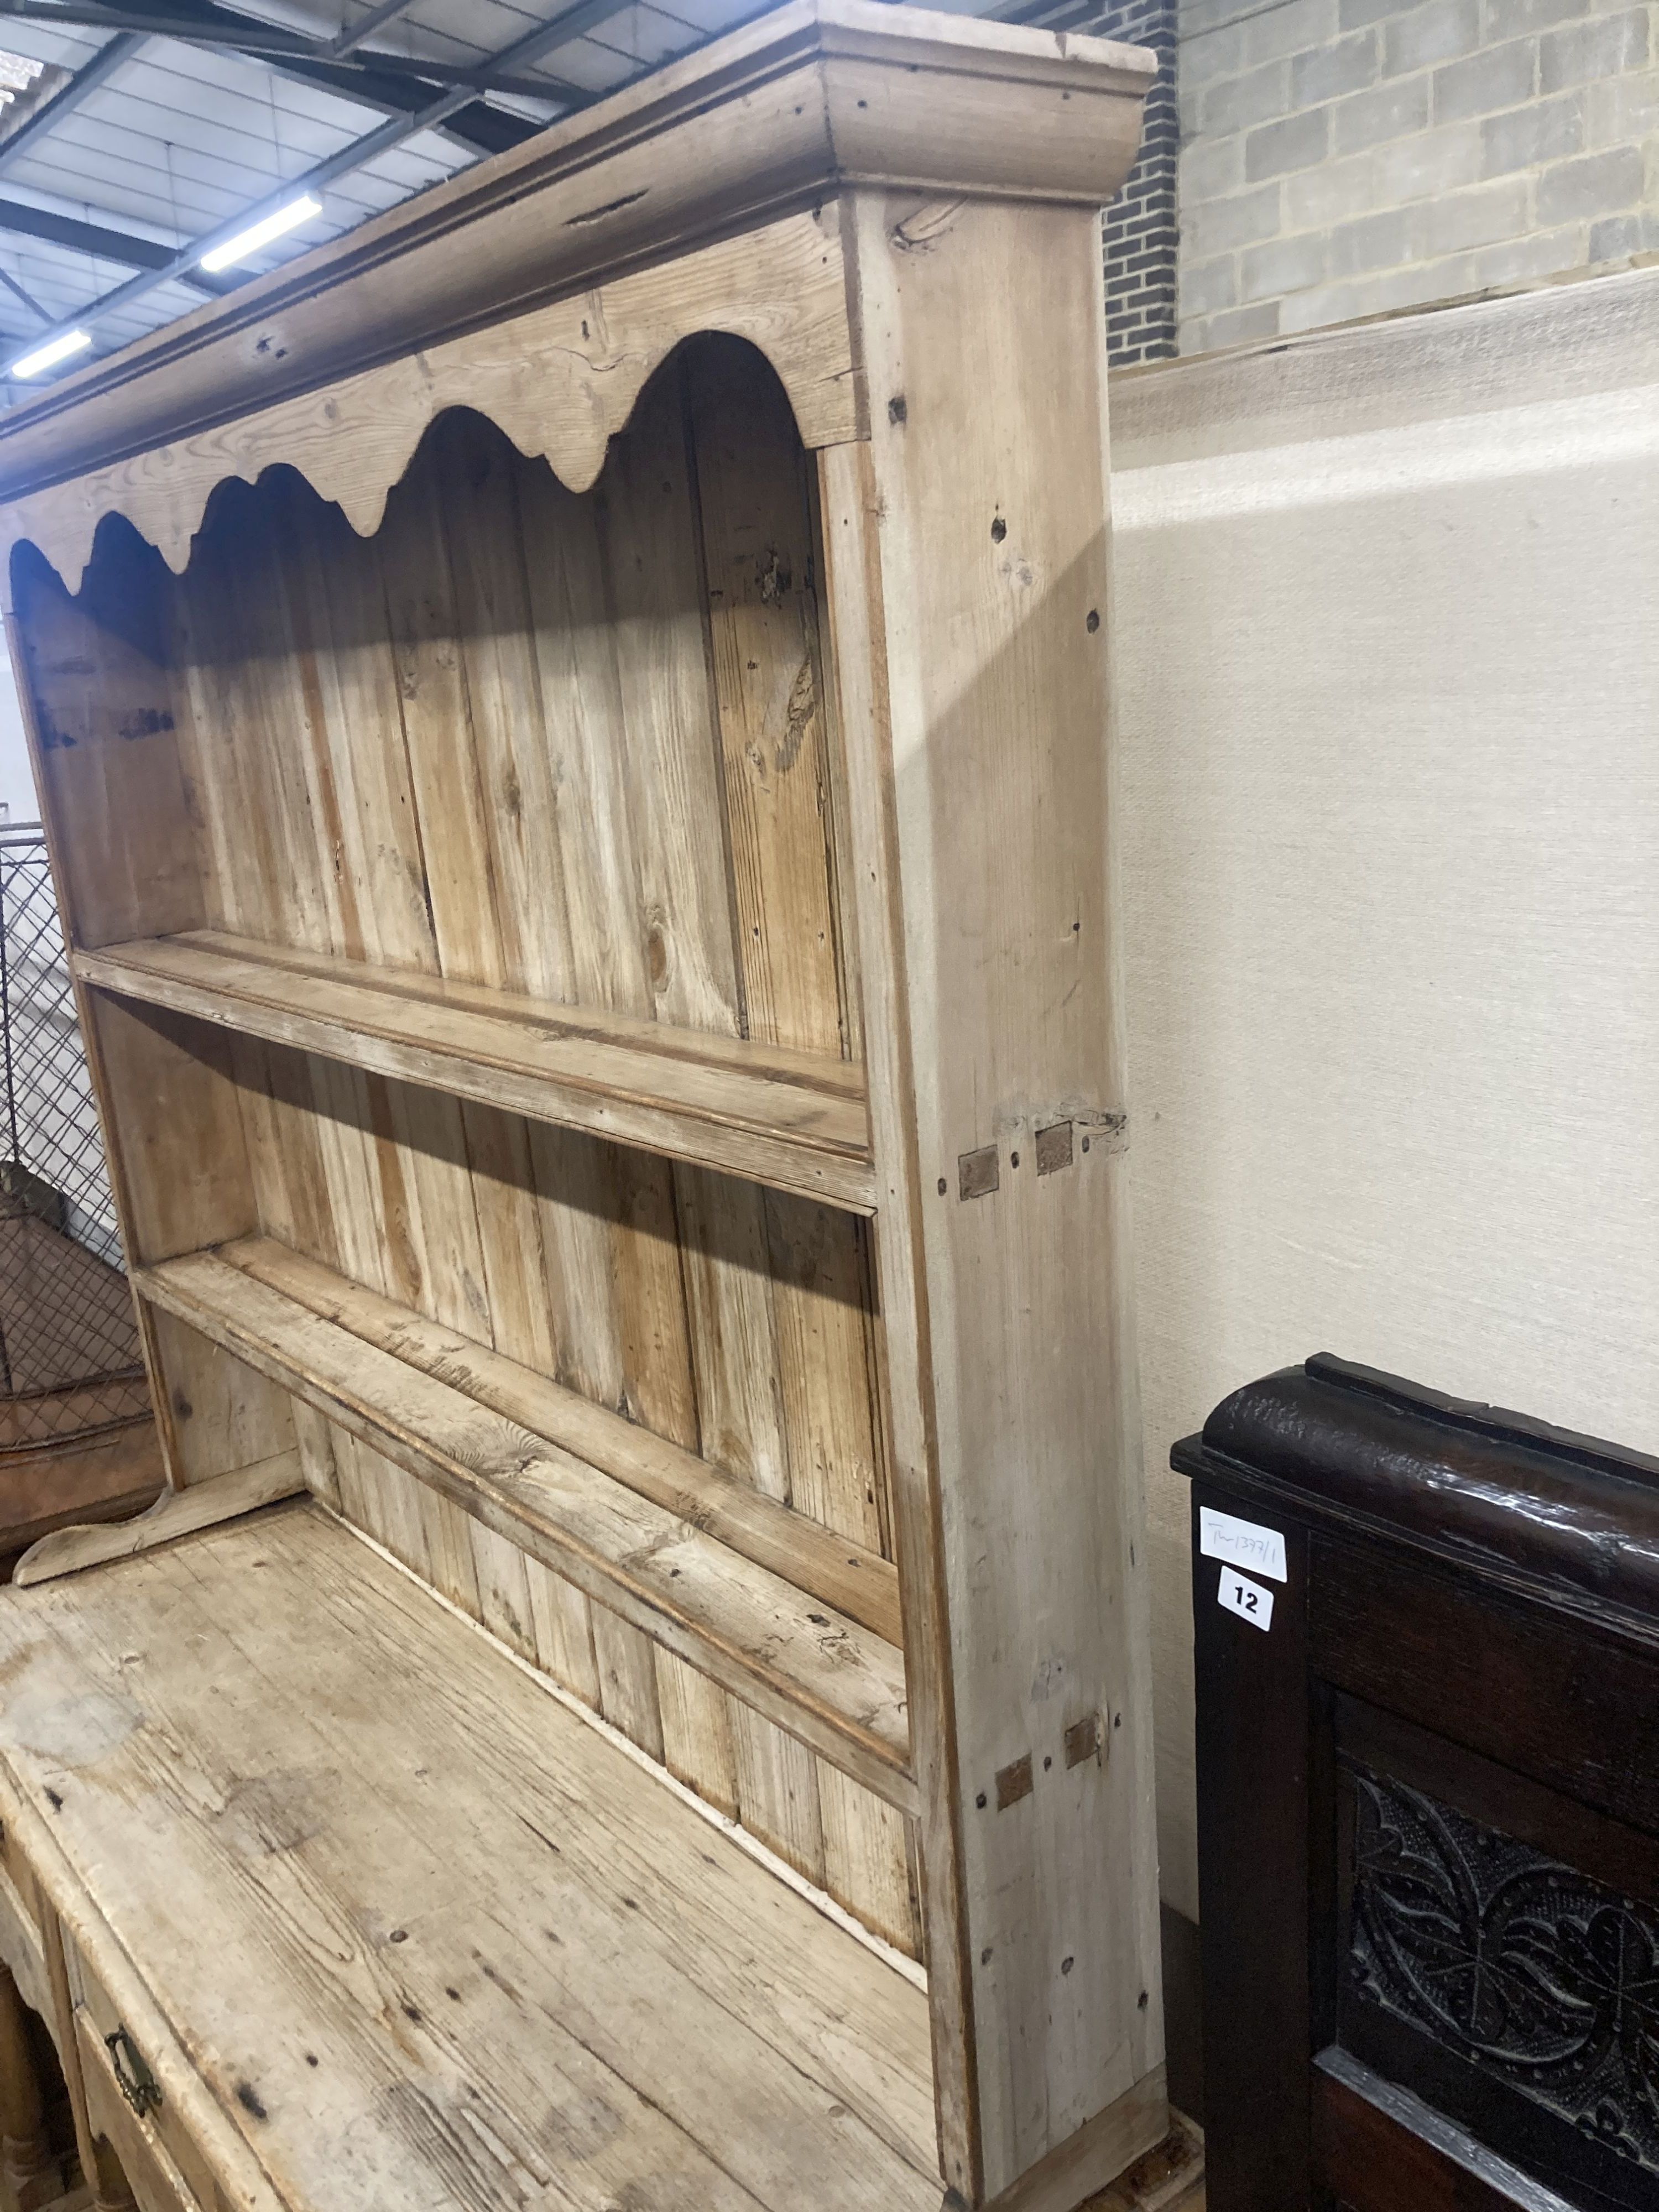 A 19th century pine potboard dresser, length 130cm, depth 47cm, height 190cm